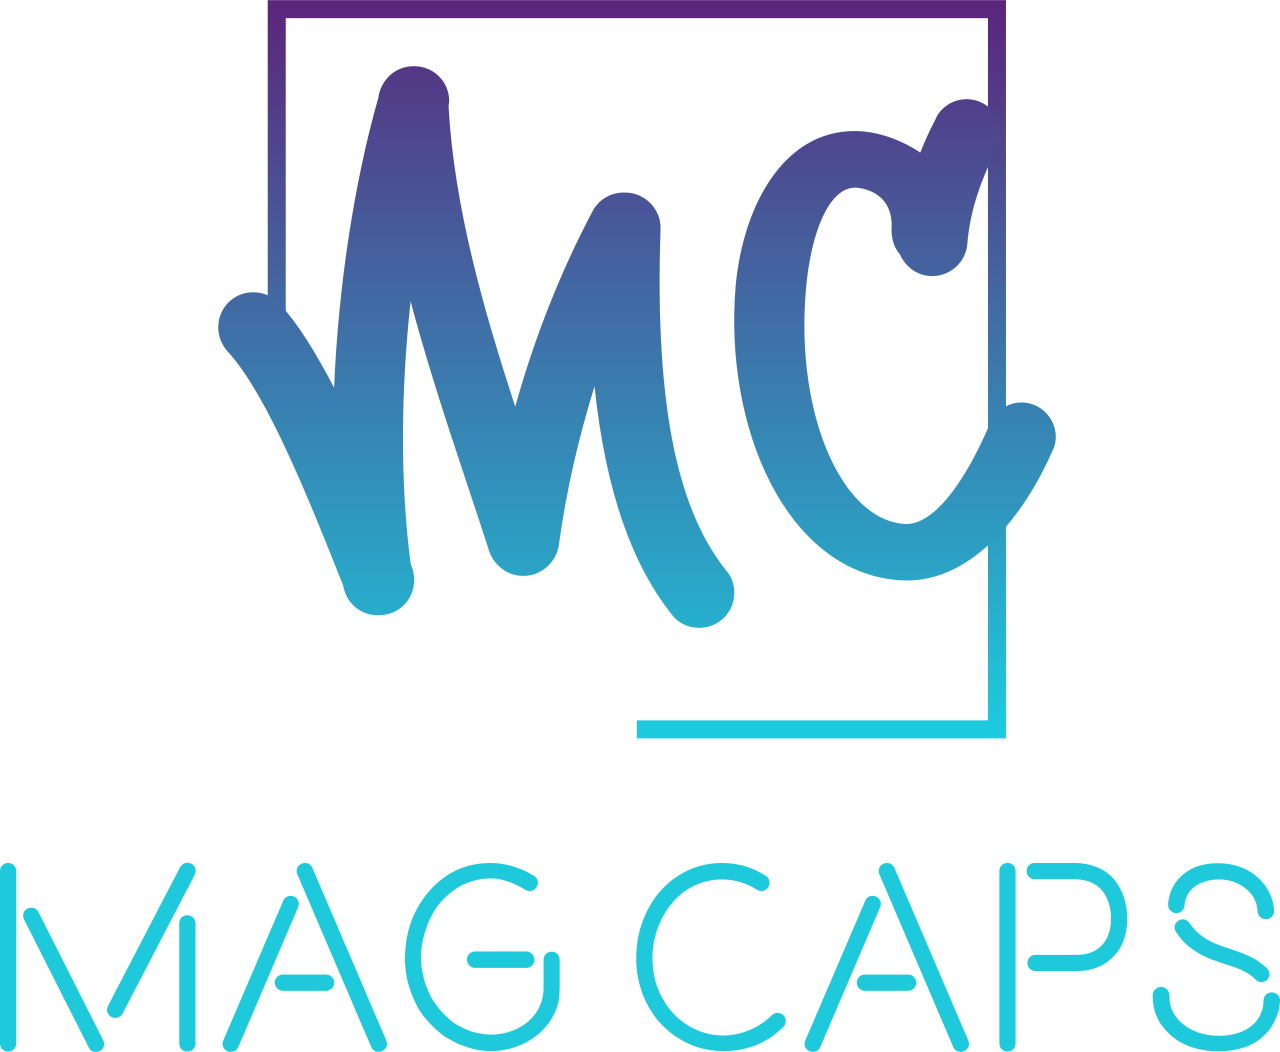 Mag caps's web page